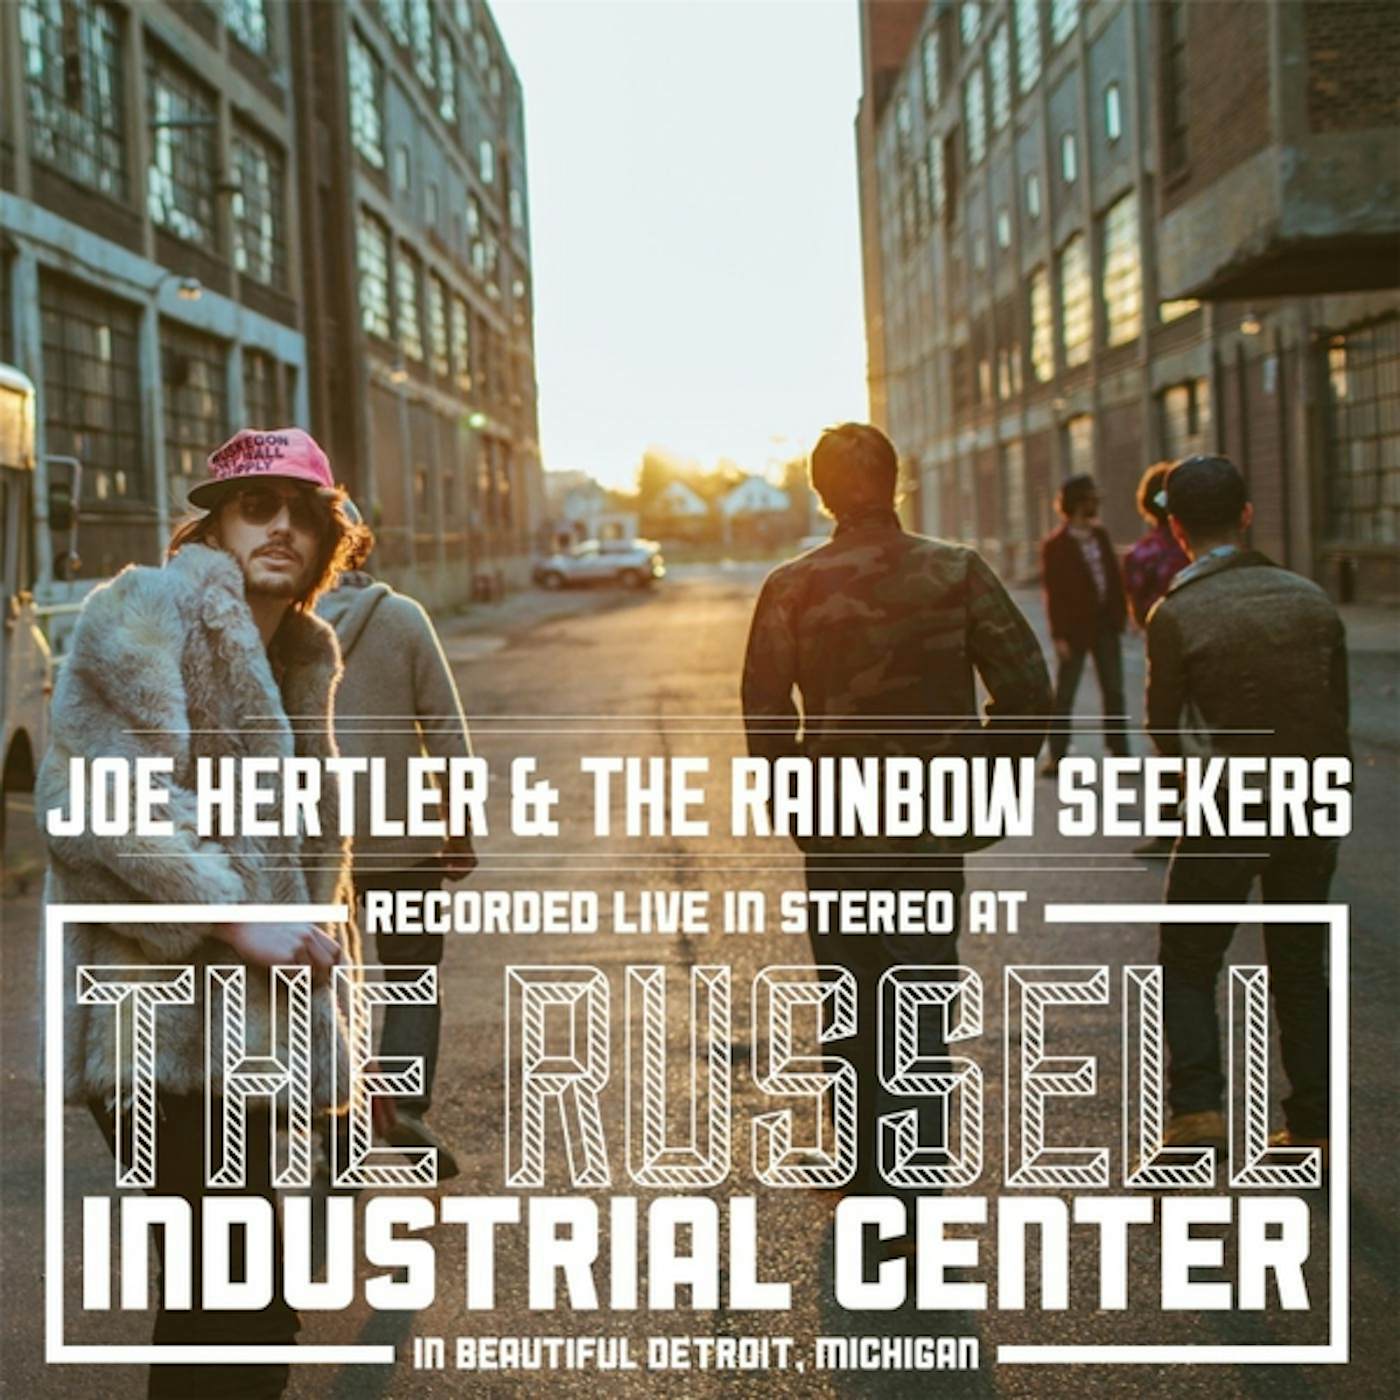 Joe Hertler & The Rainbow Seekers RUSSELL SESSIONS CD